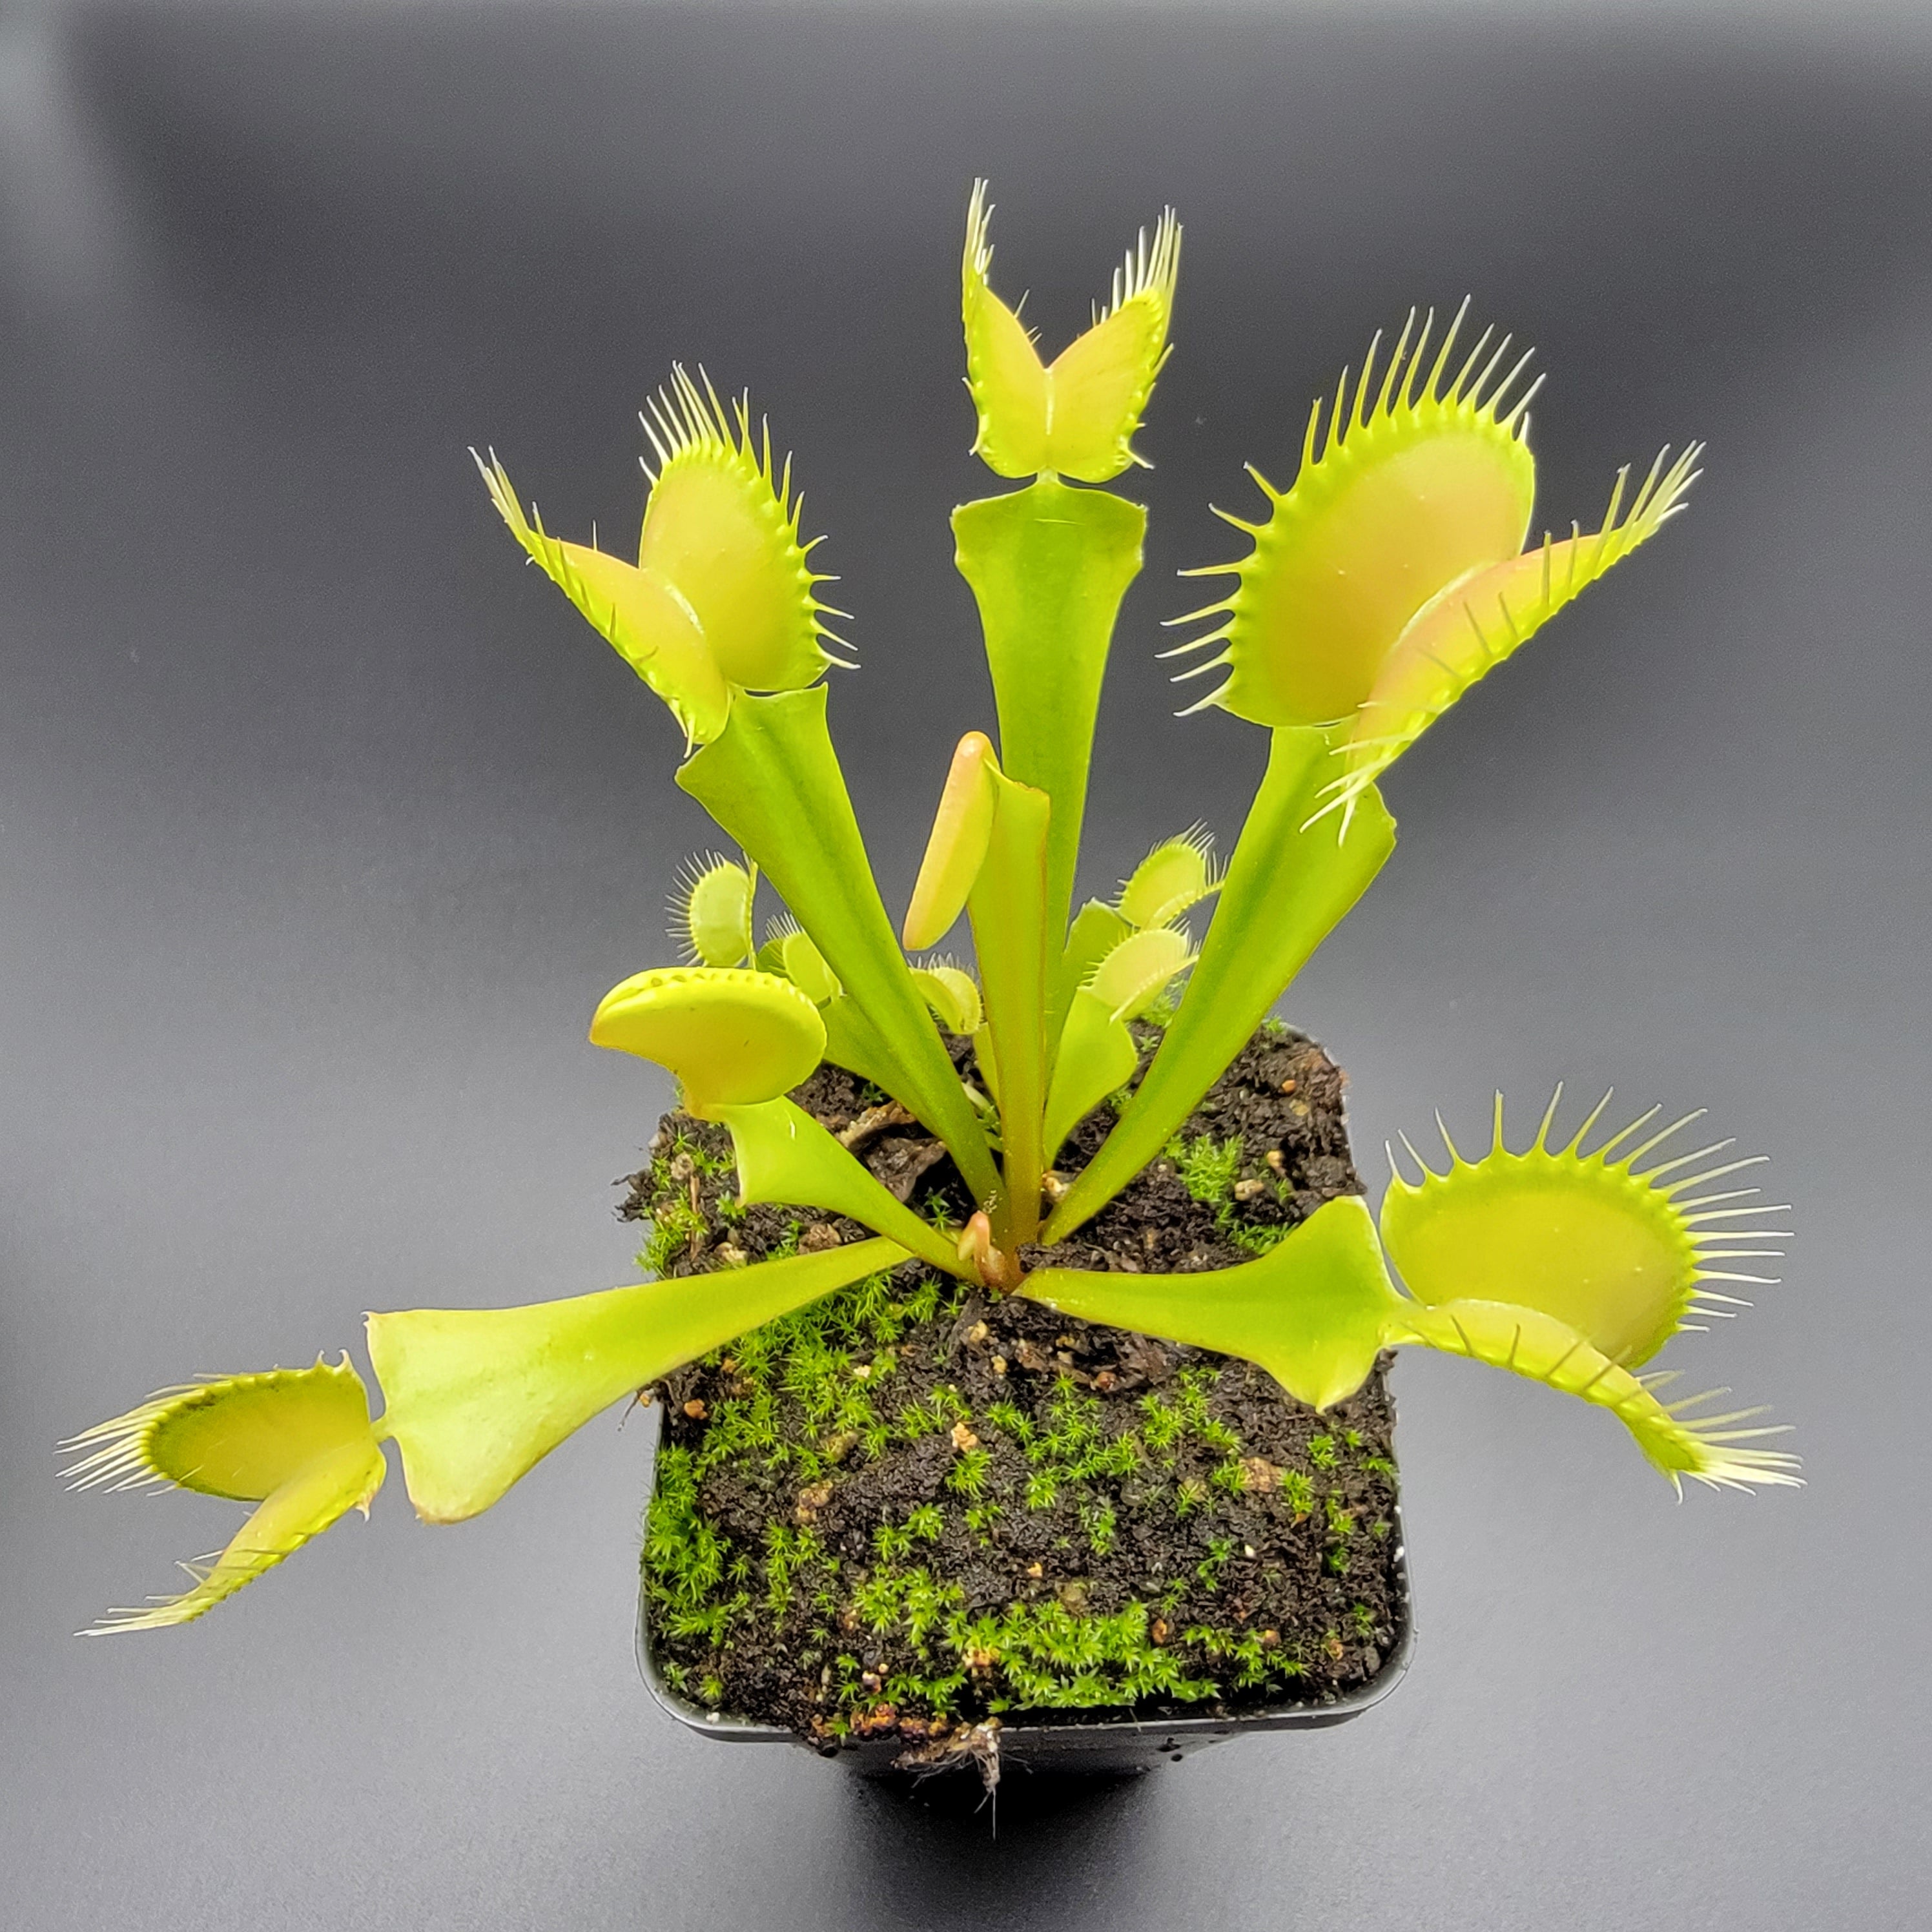 Venus flytrap (Dionaea muscipula) 'Big Mouth' x 'B52' - Rainbow Carnivorous Plants LLC